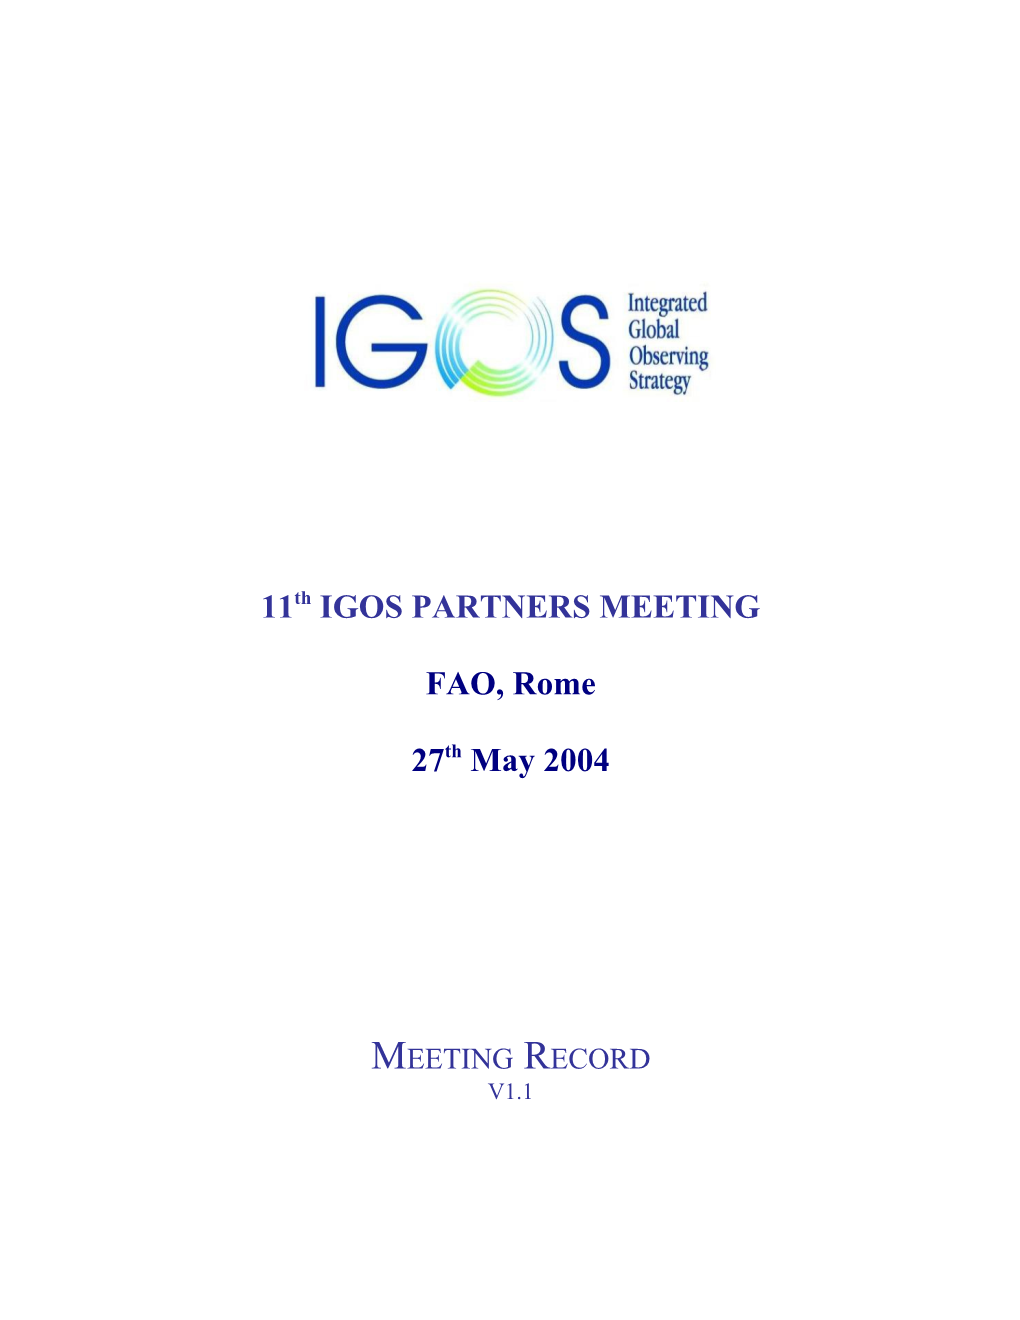 IGOS-P-11 Meeting Report